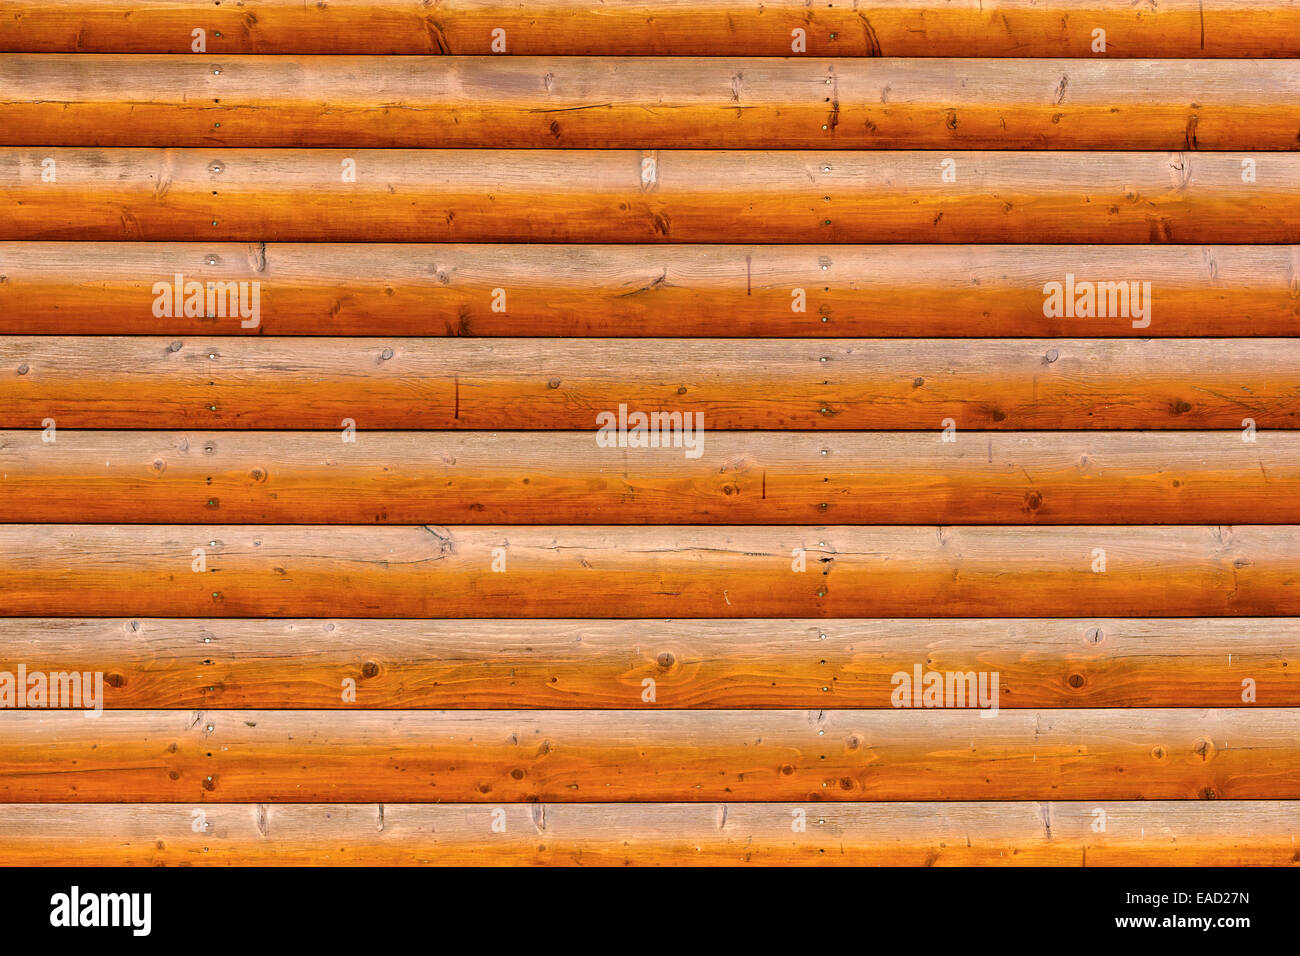 Wooden planks texture. Stock Photo